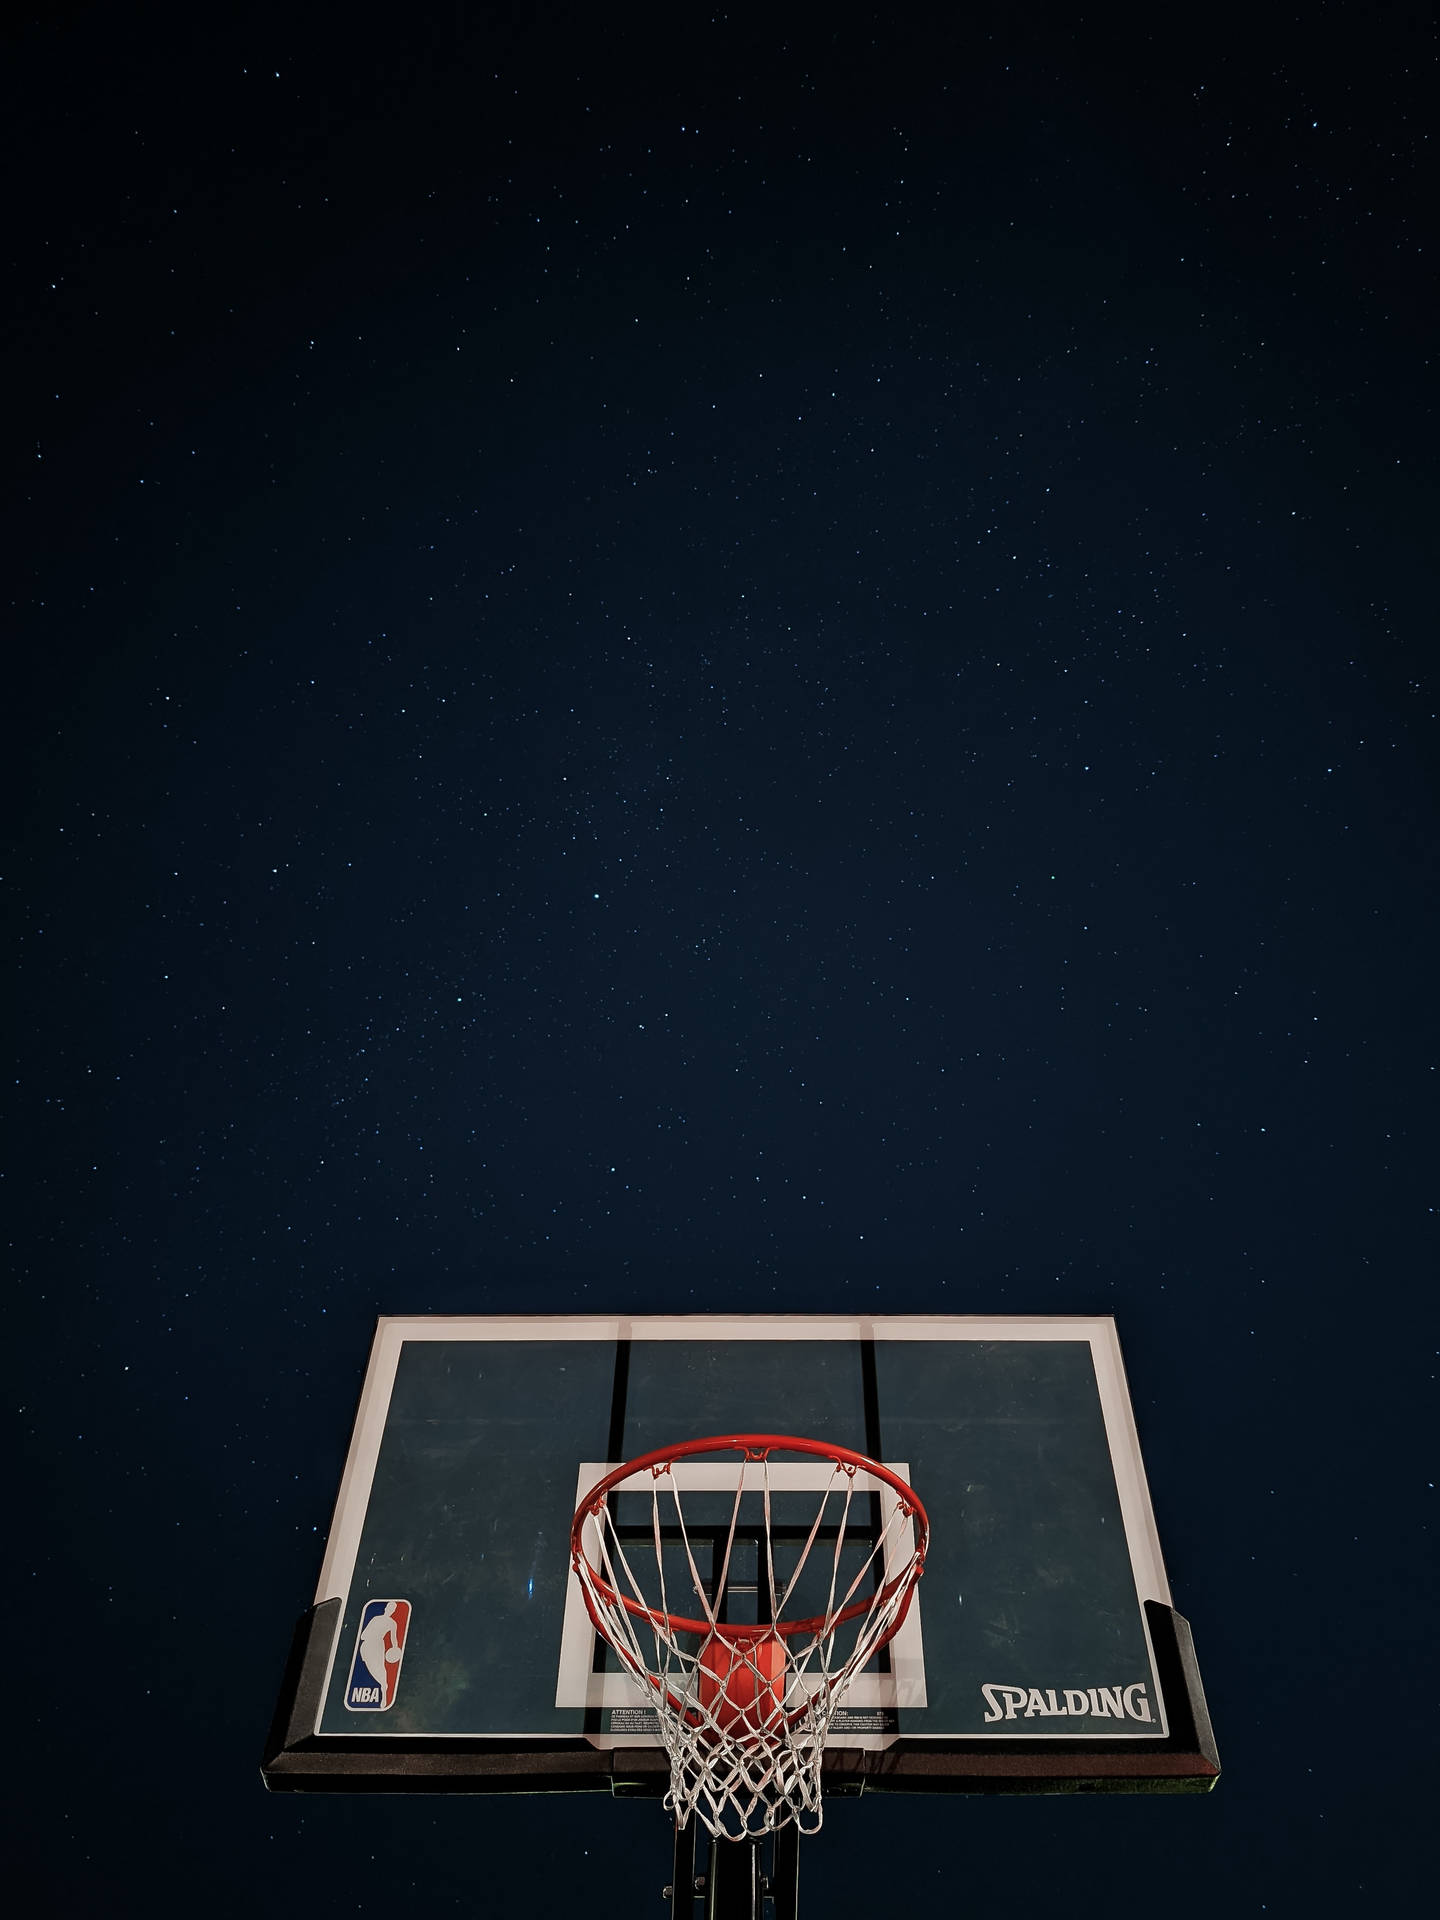 Hd Basketball Ring In Night Sky